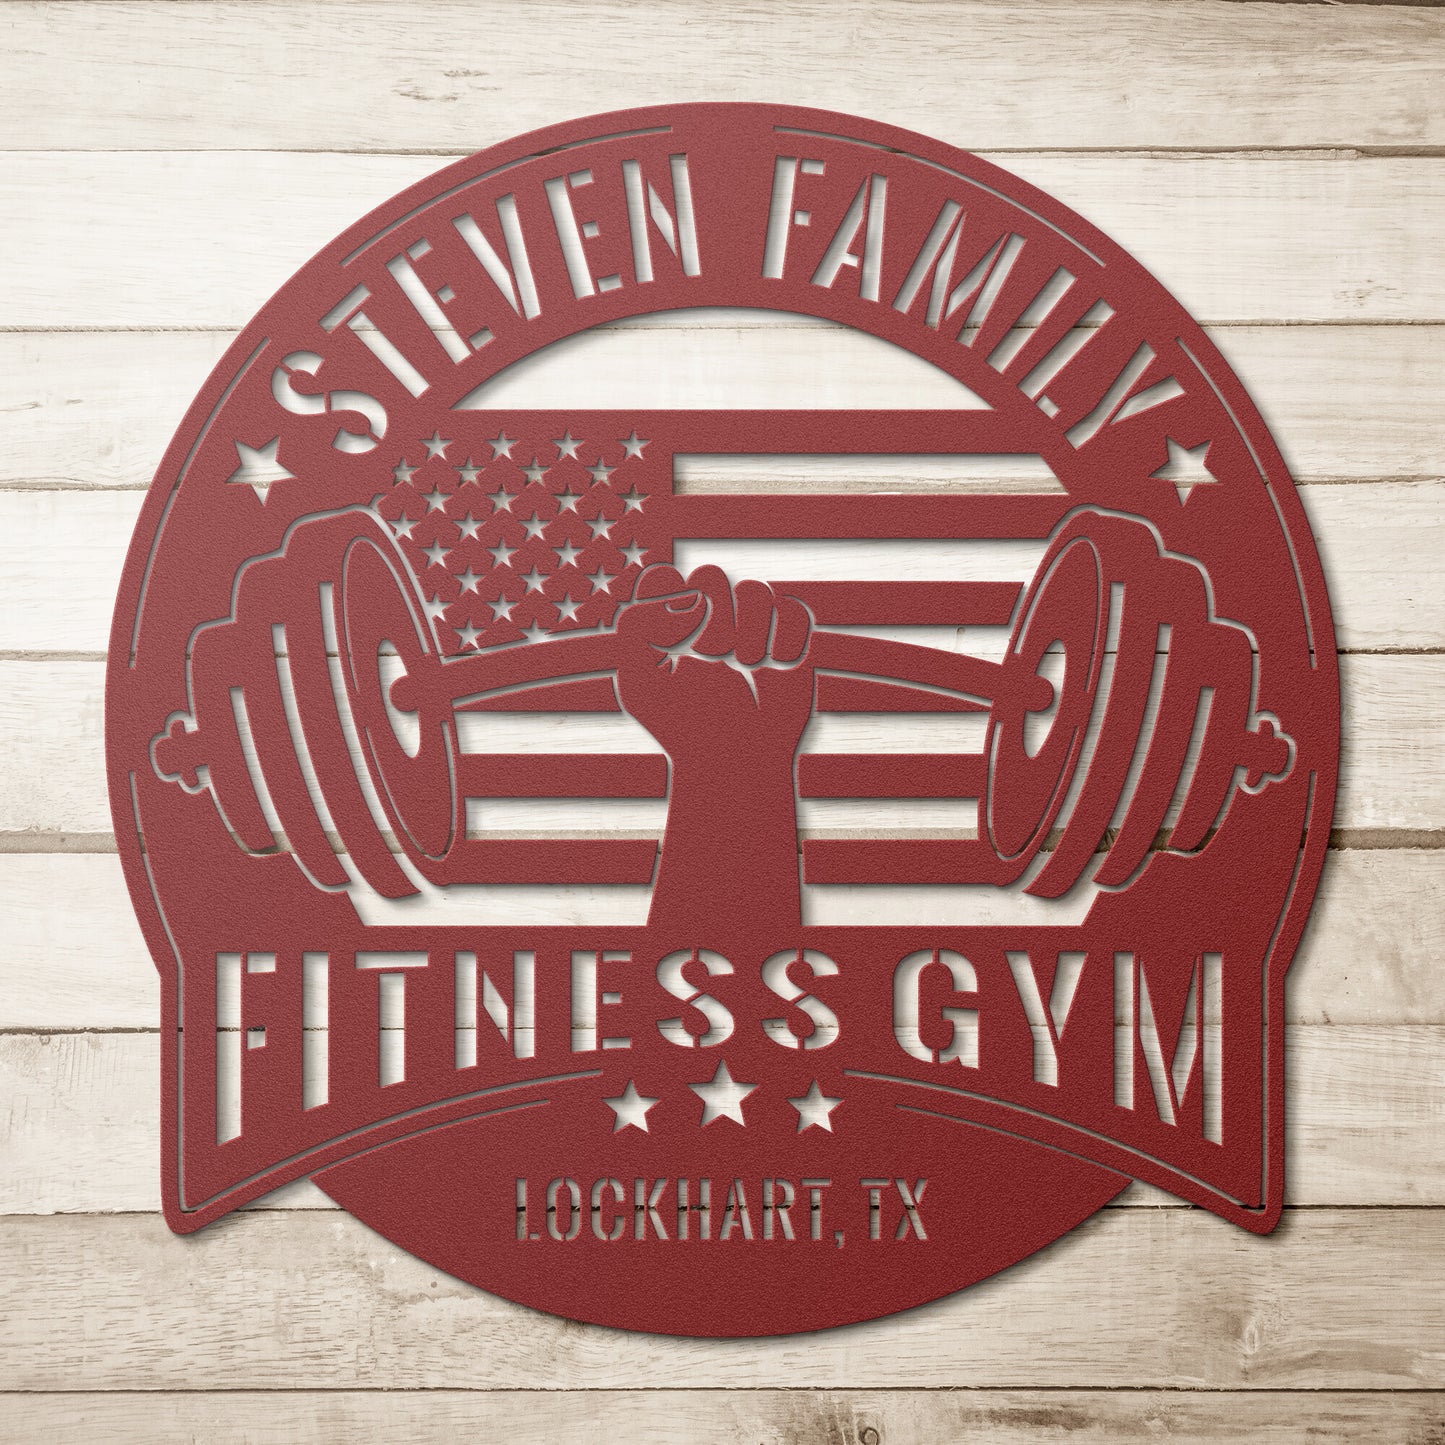 Custom USA Family Fitness Studio Gym Sign